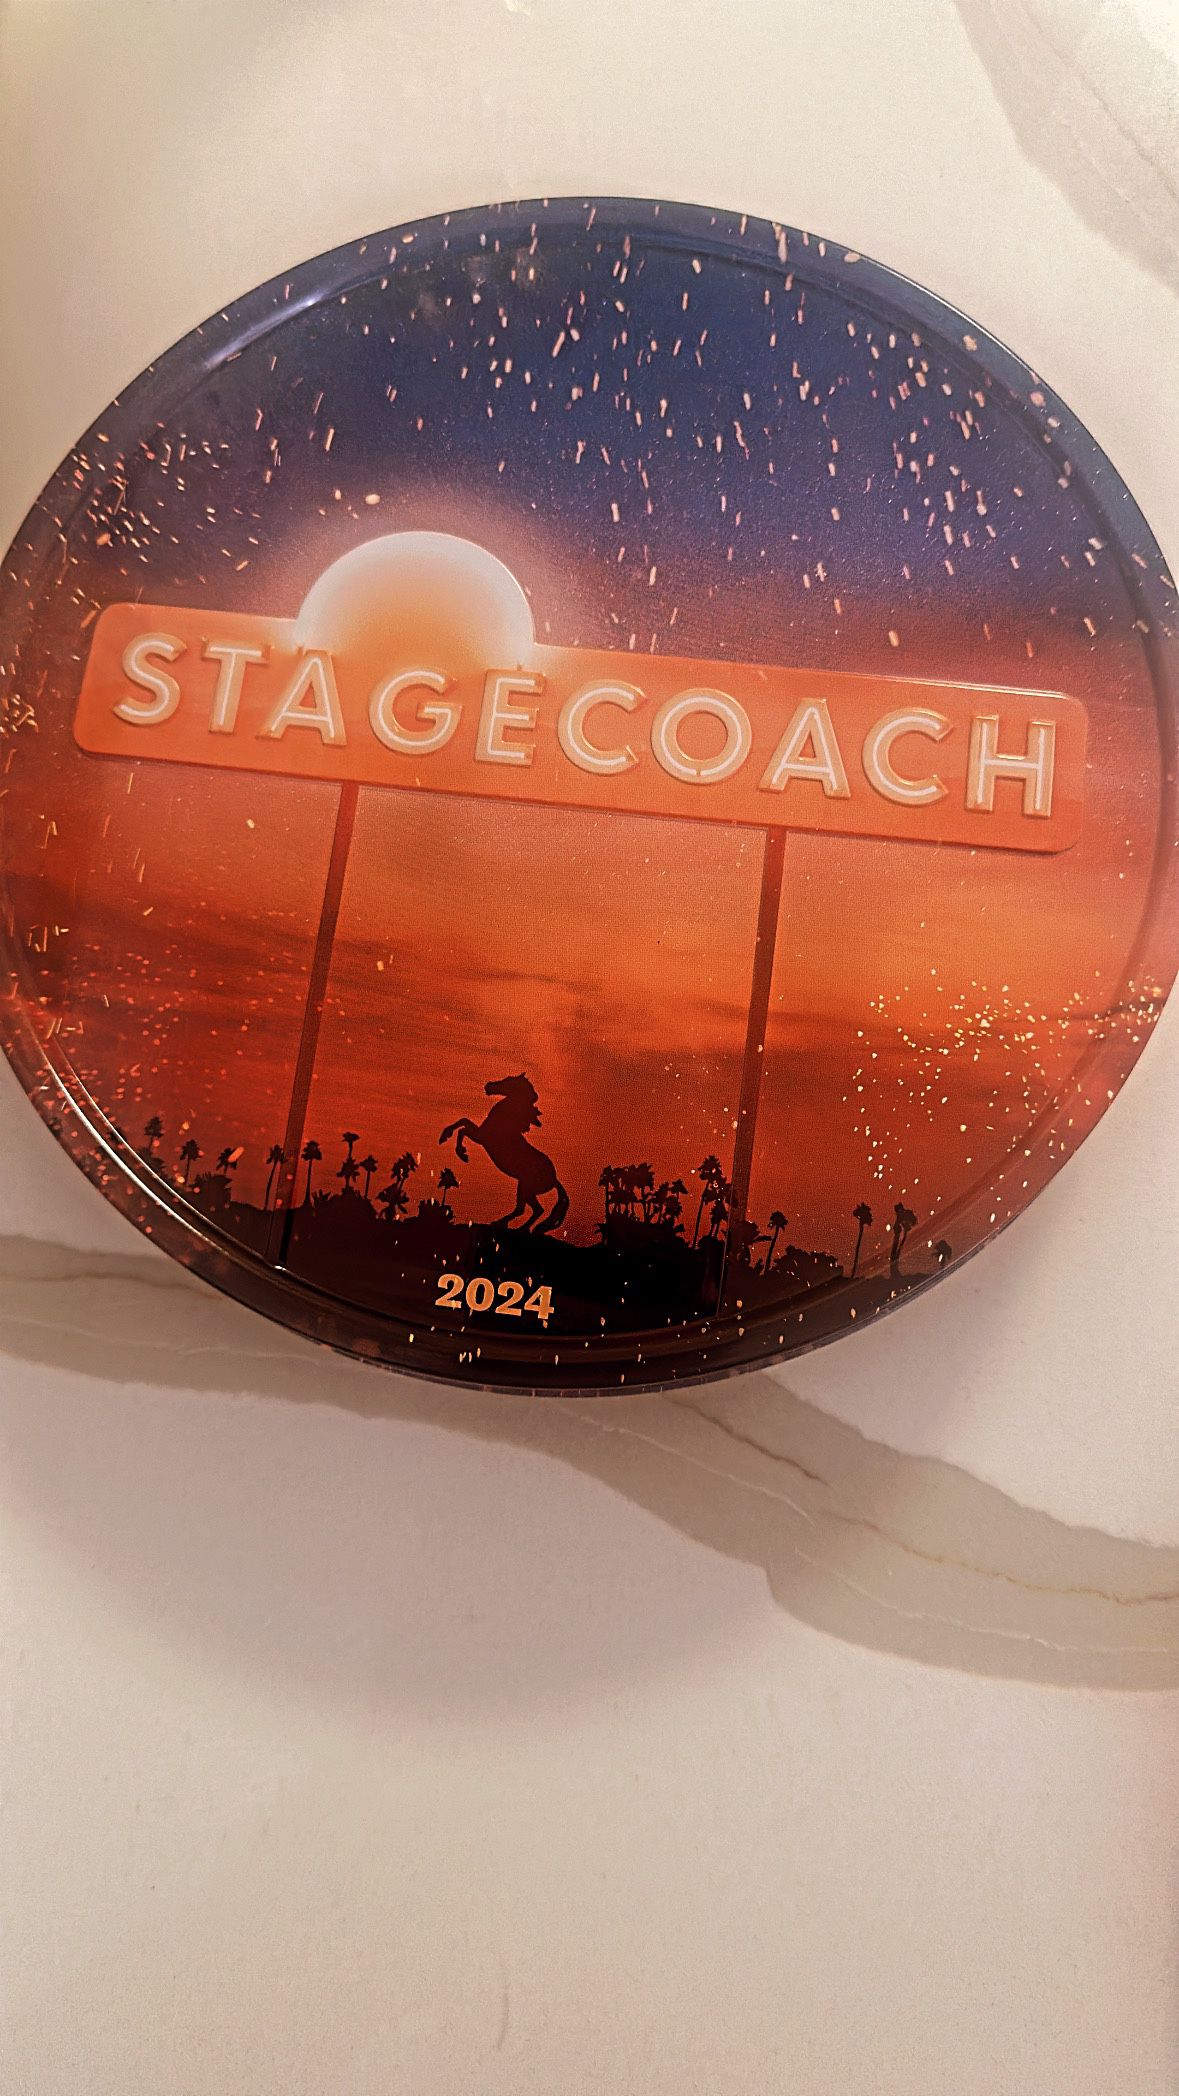 Stagecoach 2024  Please Read The Description